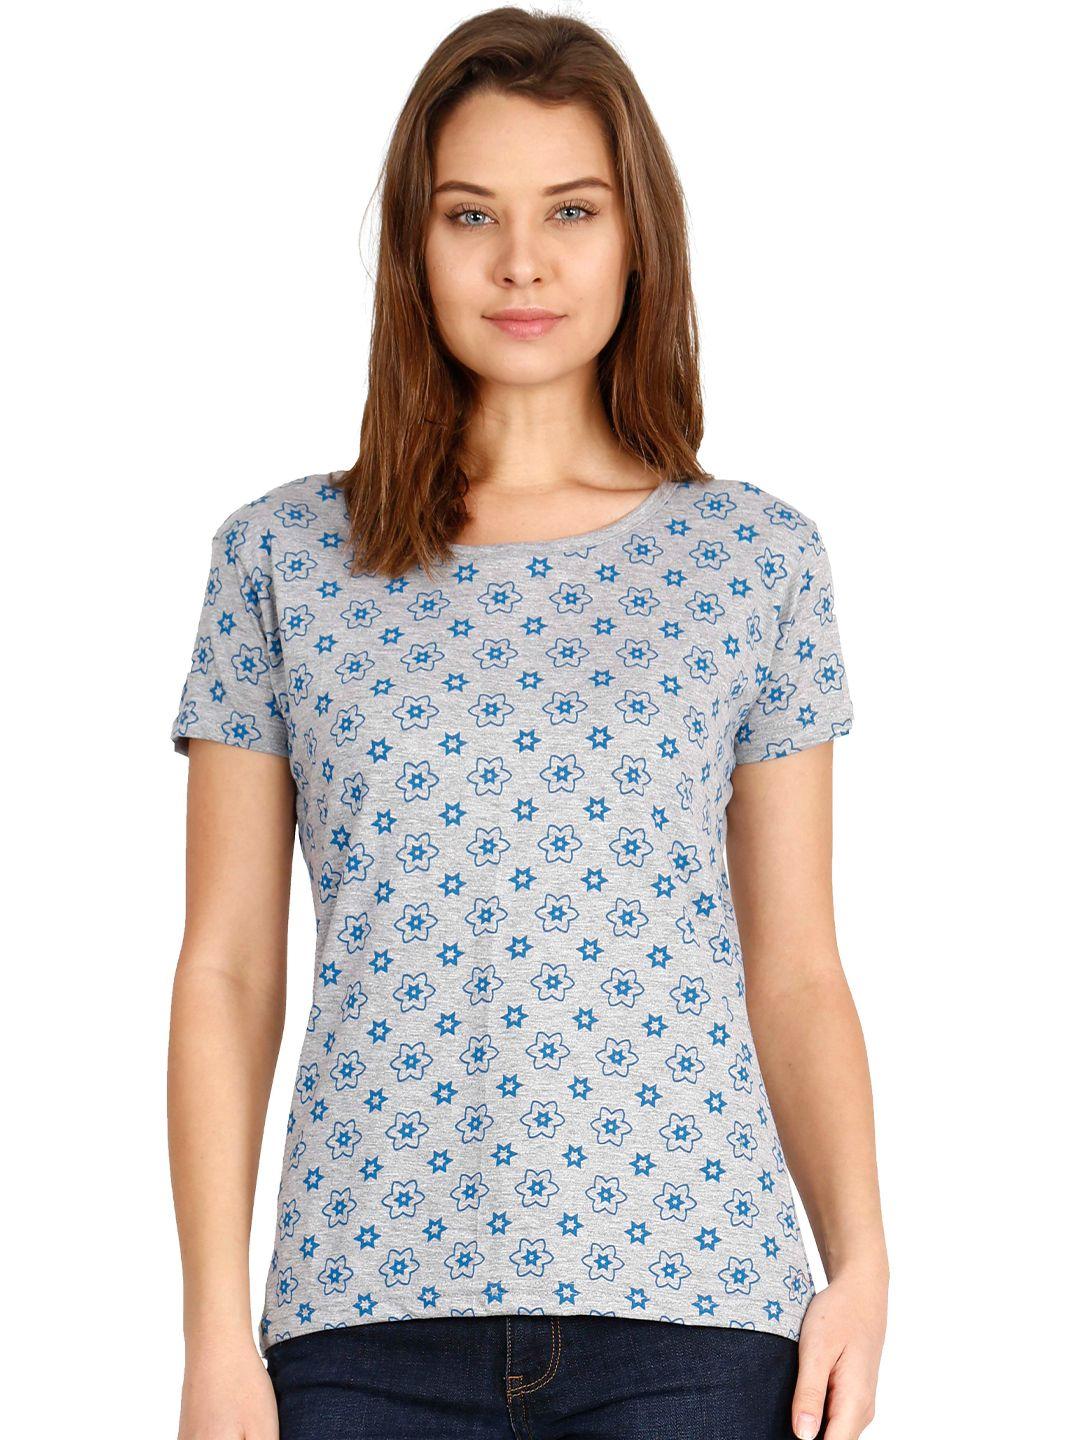 fleximaa-women-grey-floral-printed-cotton-t-shirt